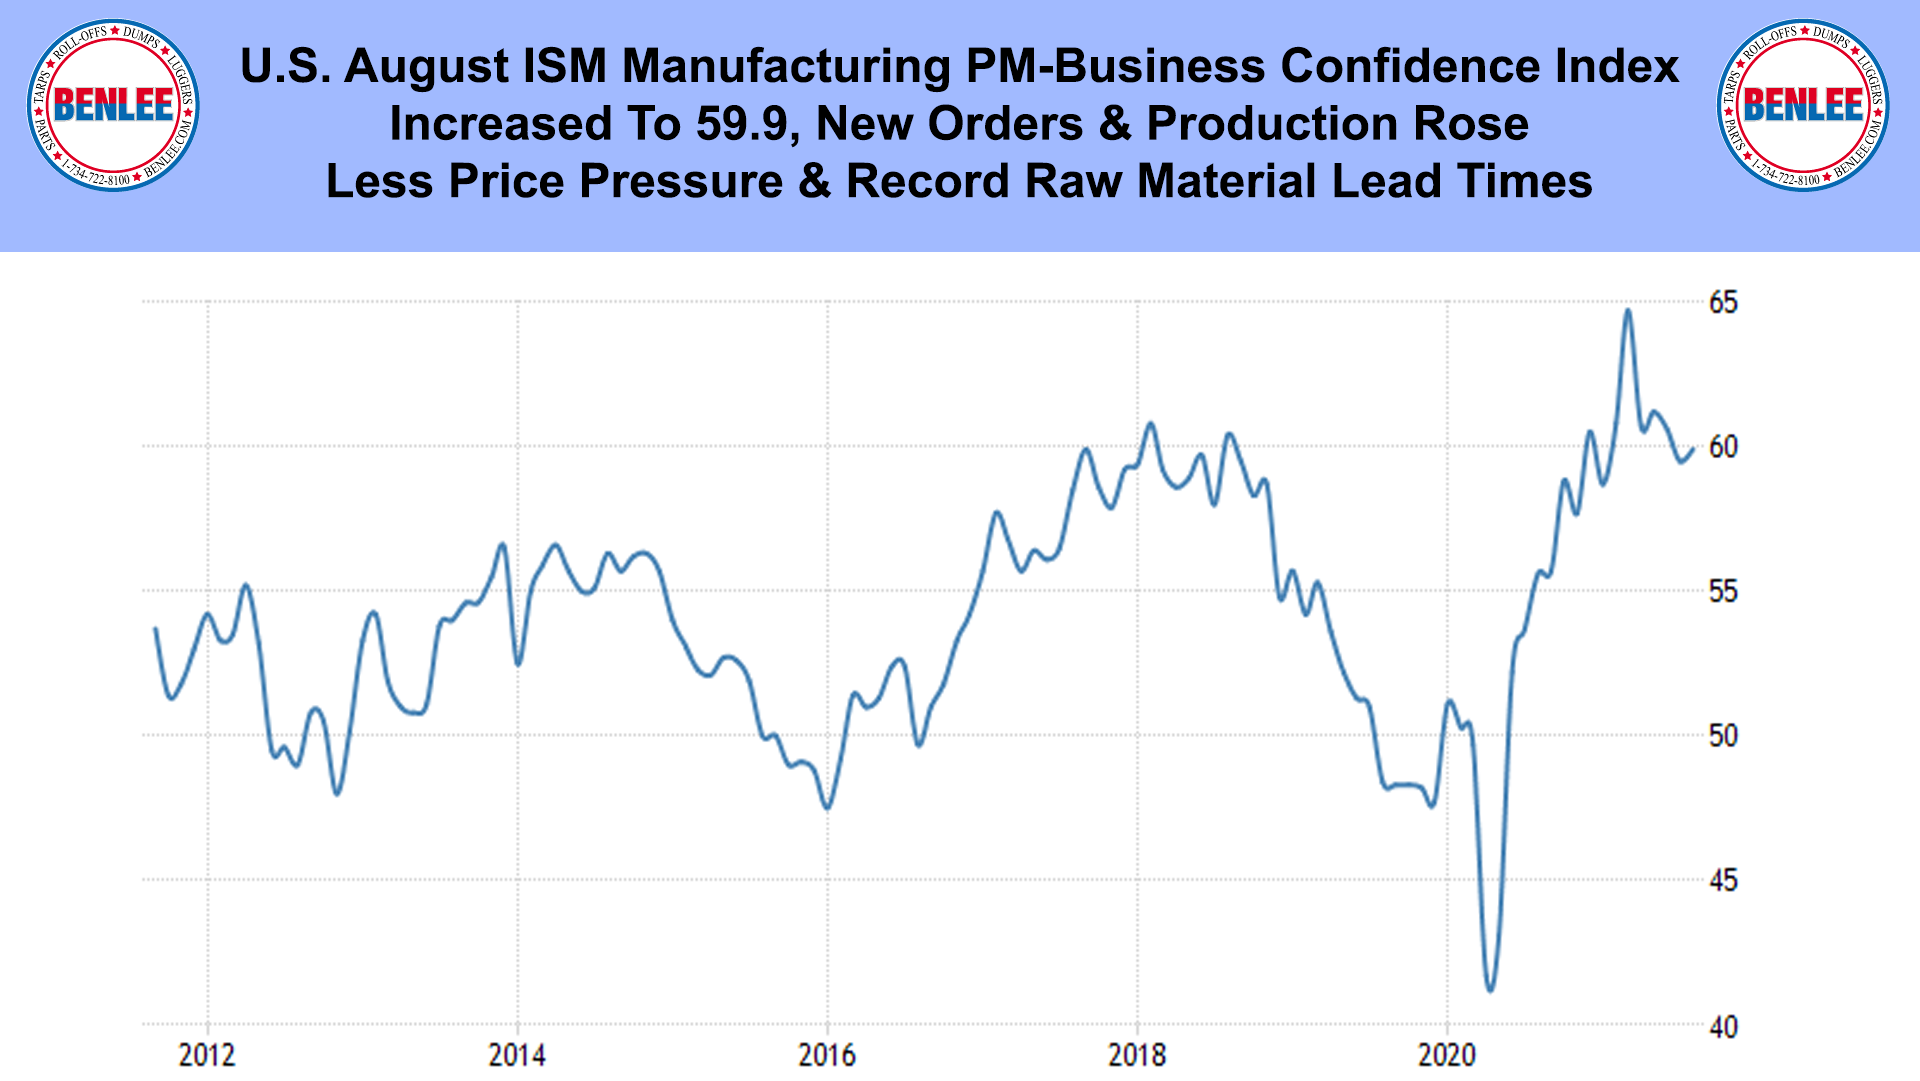 U.S. August ISM Manufacturing PM